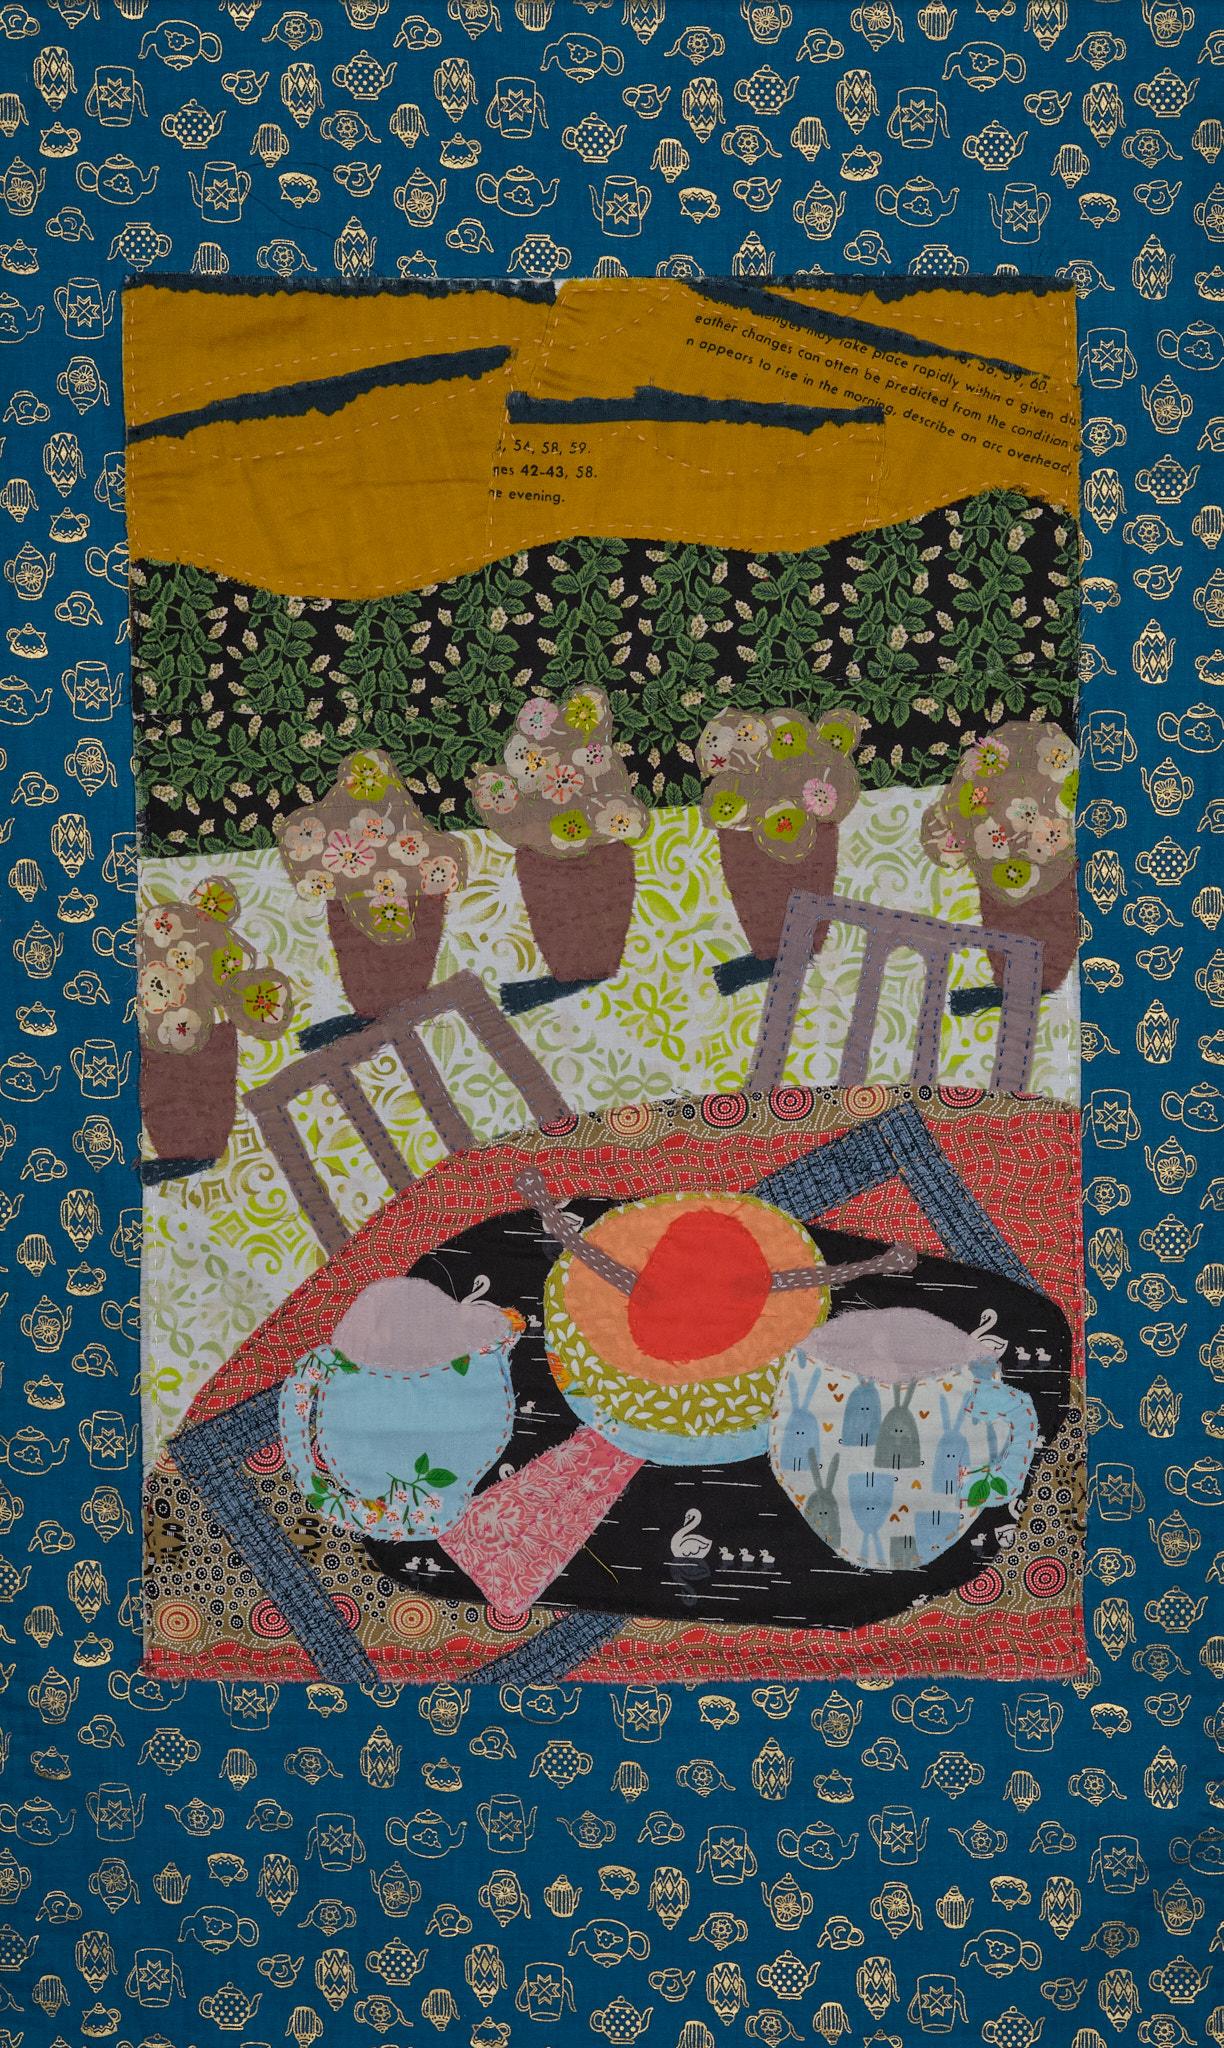 Mara Wagner: "Backyard Brunch" - Hand-stitched tapestry - 17x35 - $790